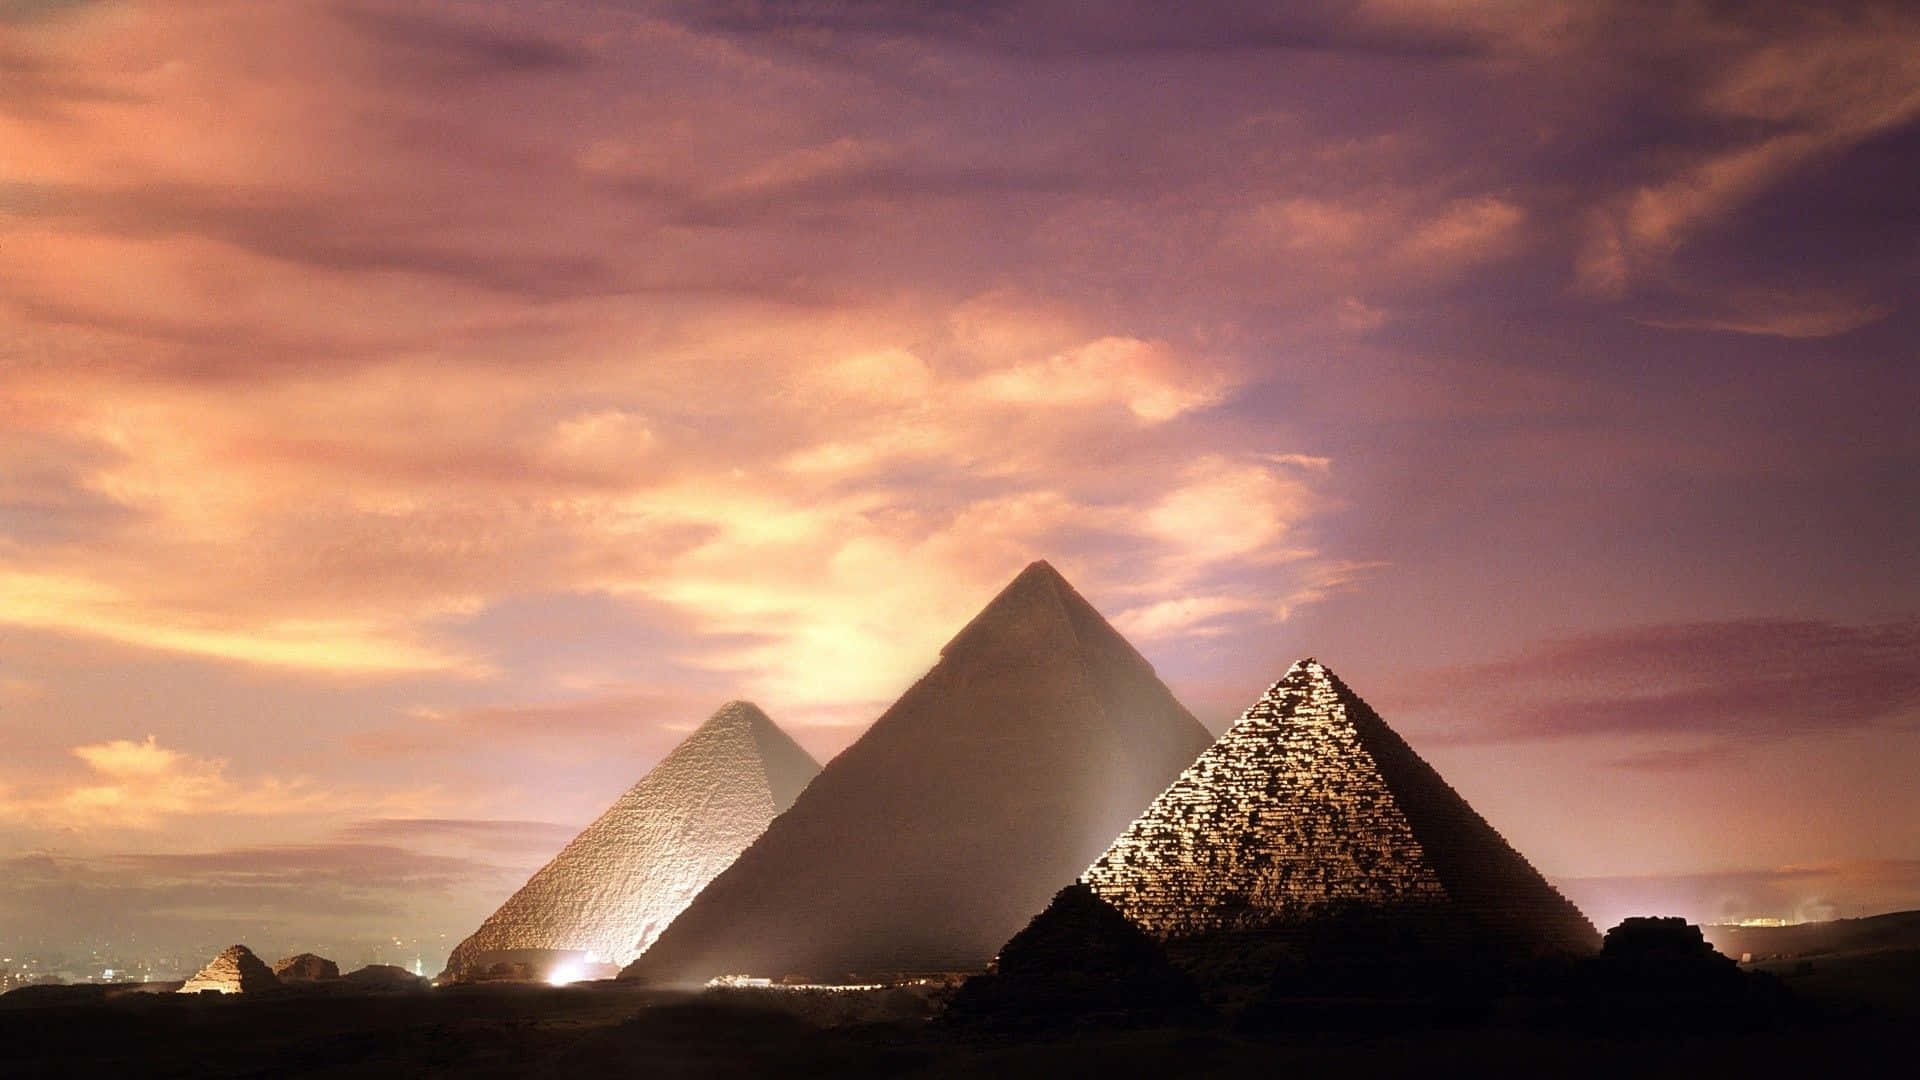 Majestic Pyramids of Giza against a stunning sunset sky